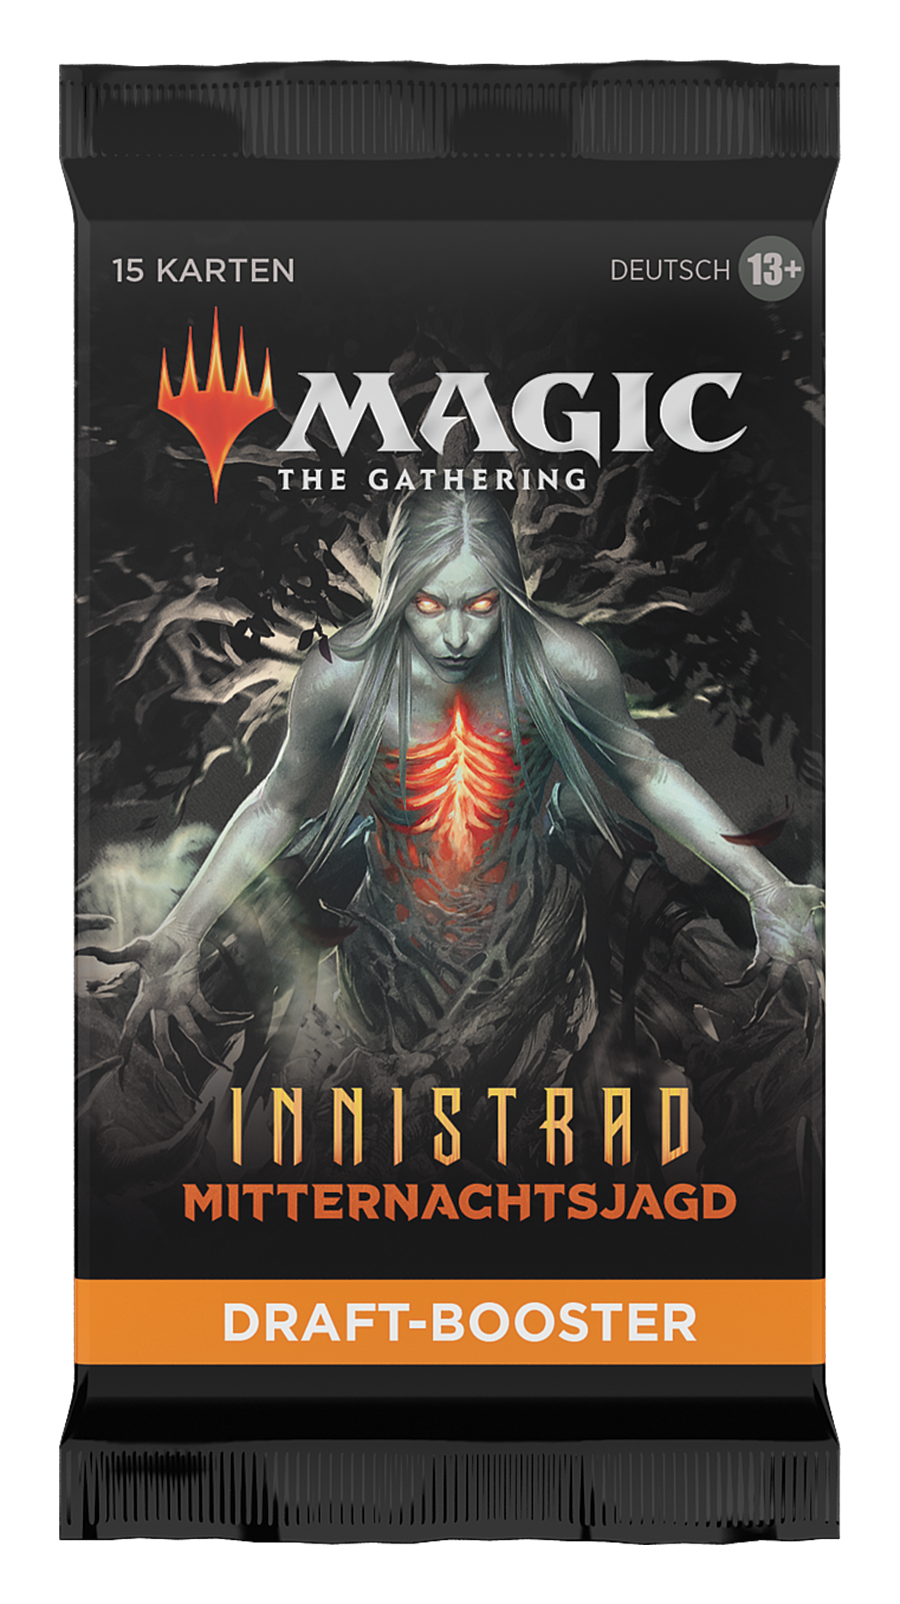 Magic the Gathering Innistrad: Mitternachtsjagd Draft-Booster